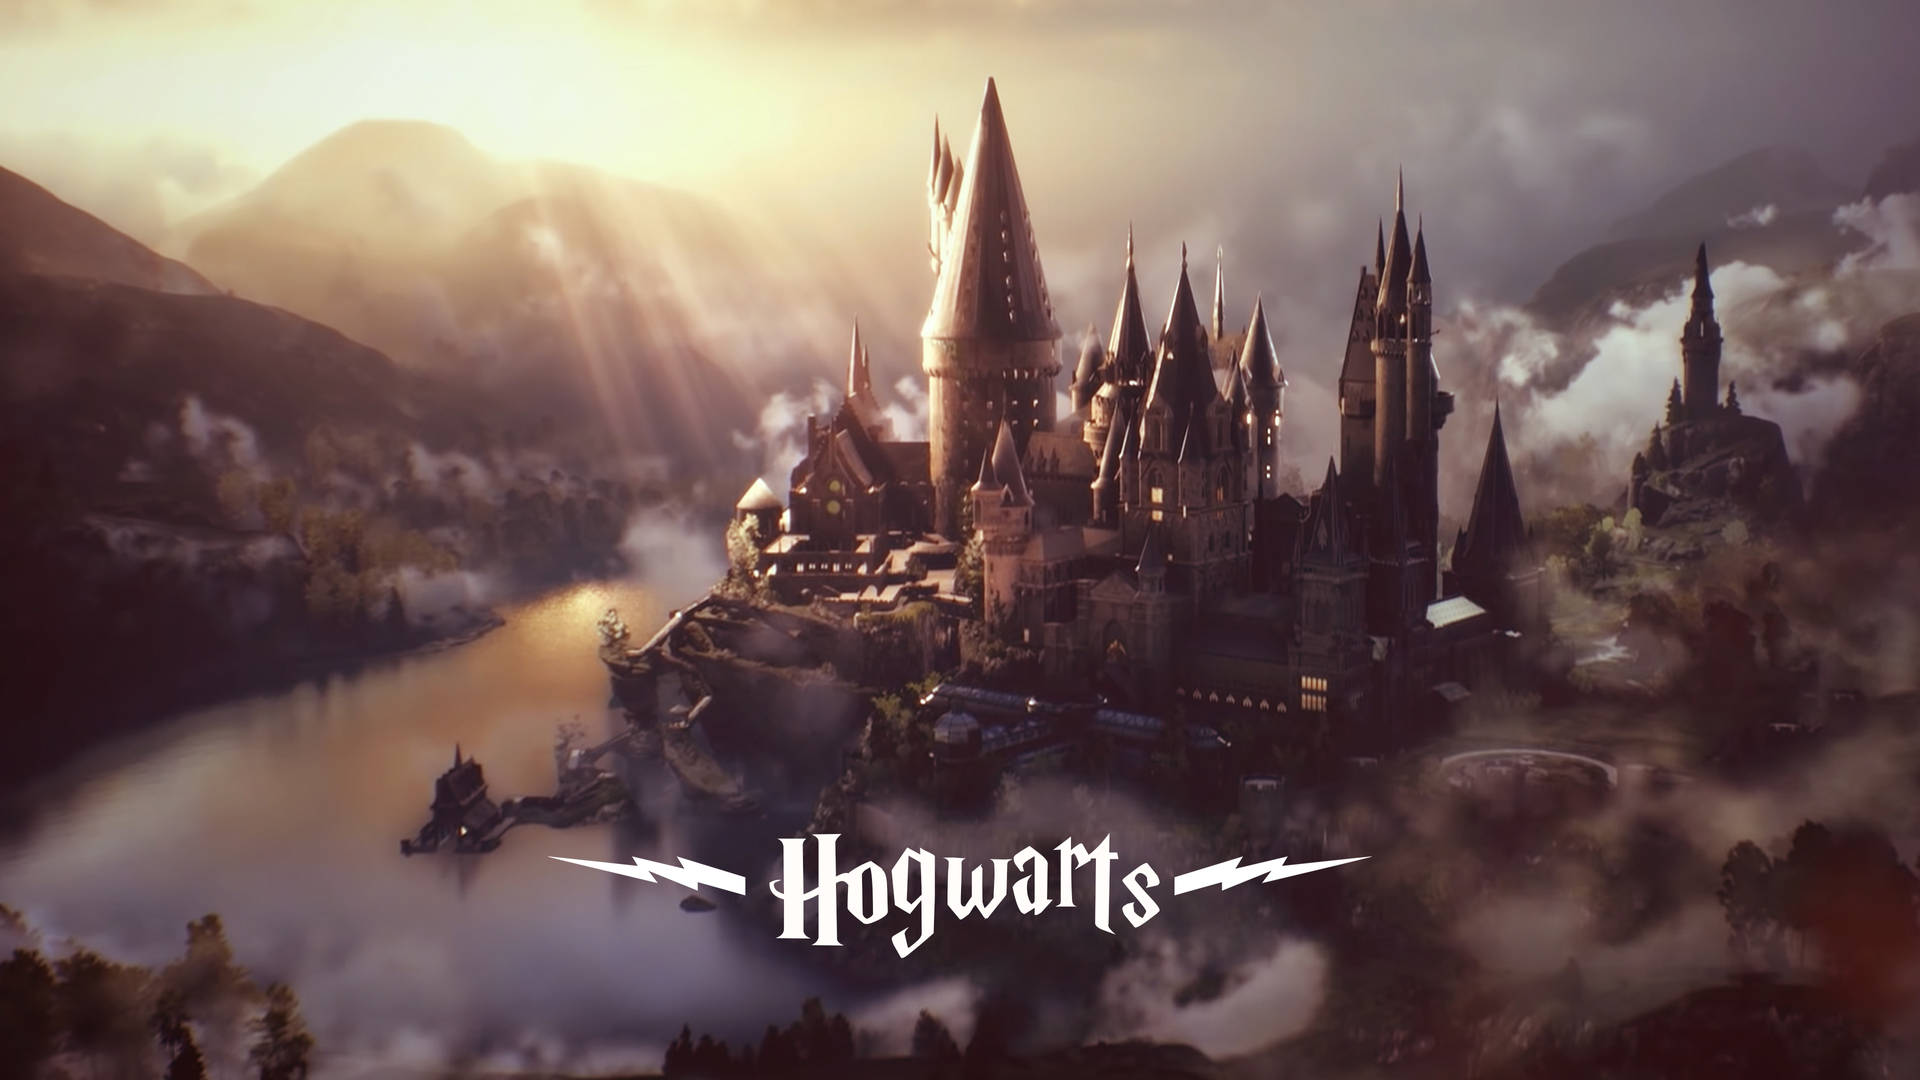 Free Hogwarts Aesthetic Wallpaper Downloads, [100+] Hogwarts Aesthetic  Wallpapers for FREE 